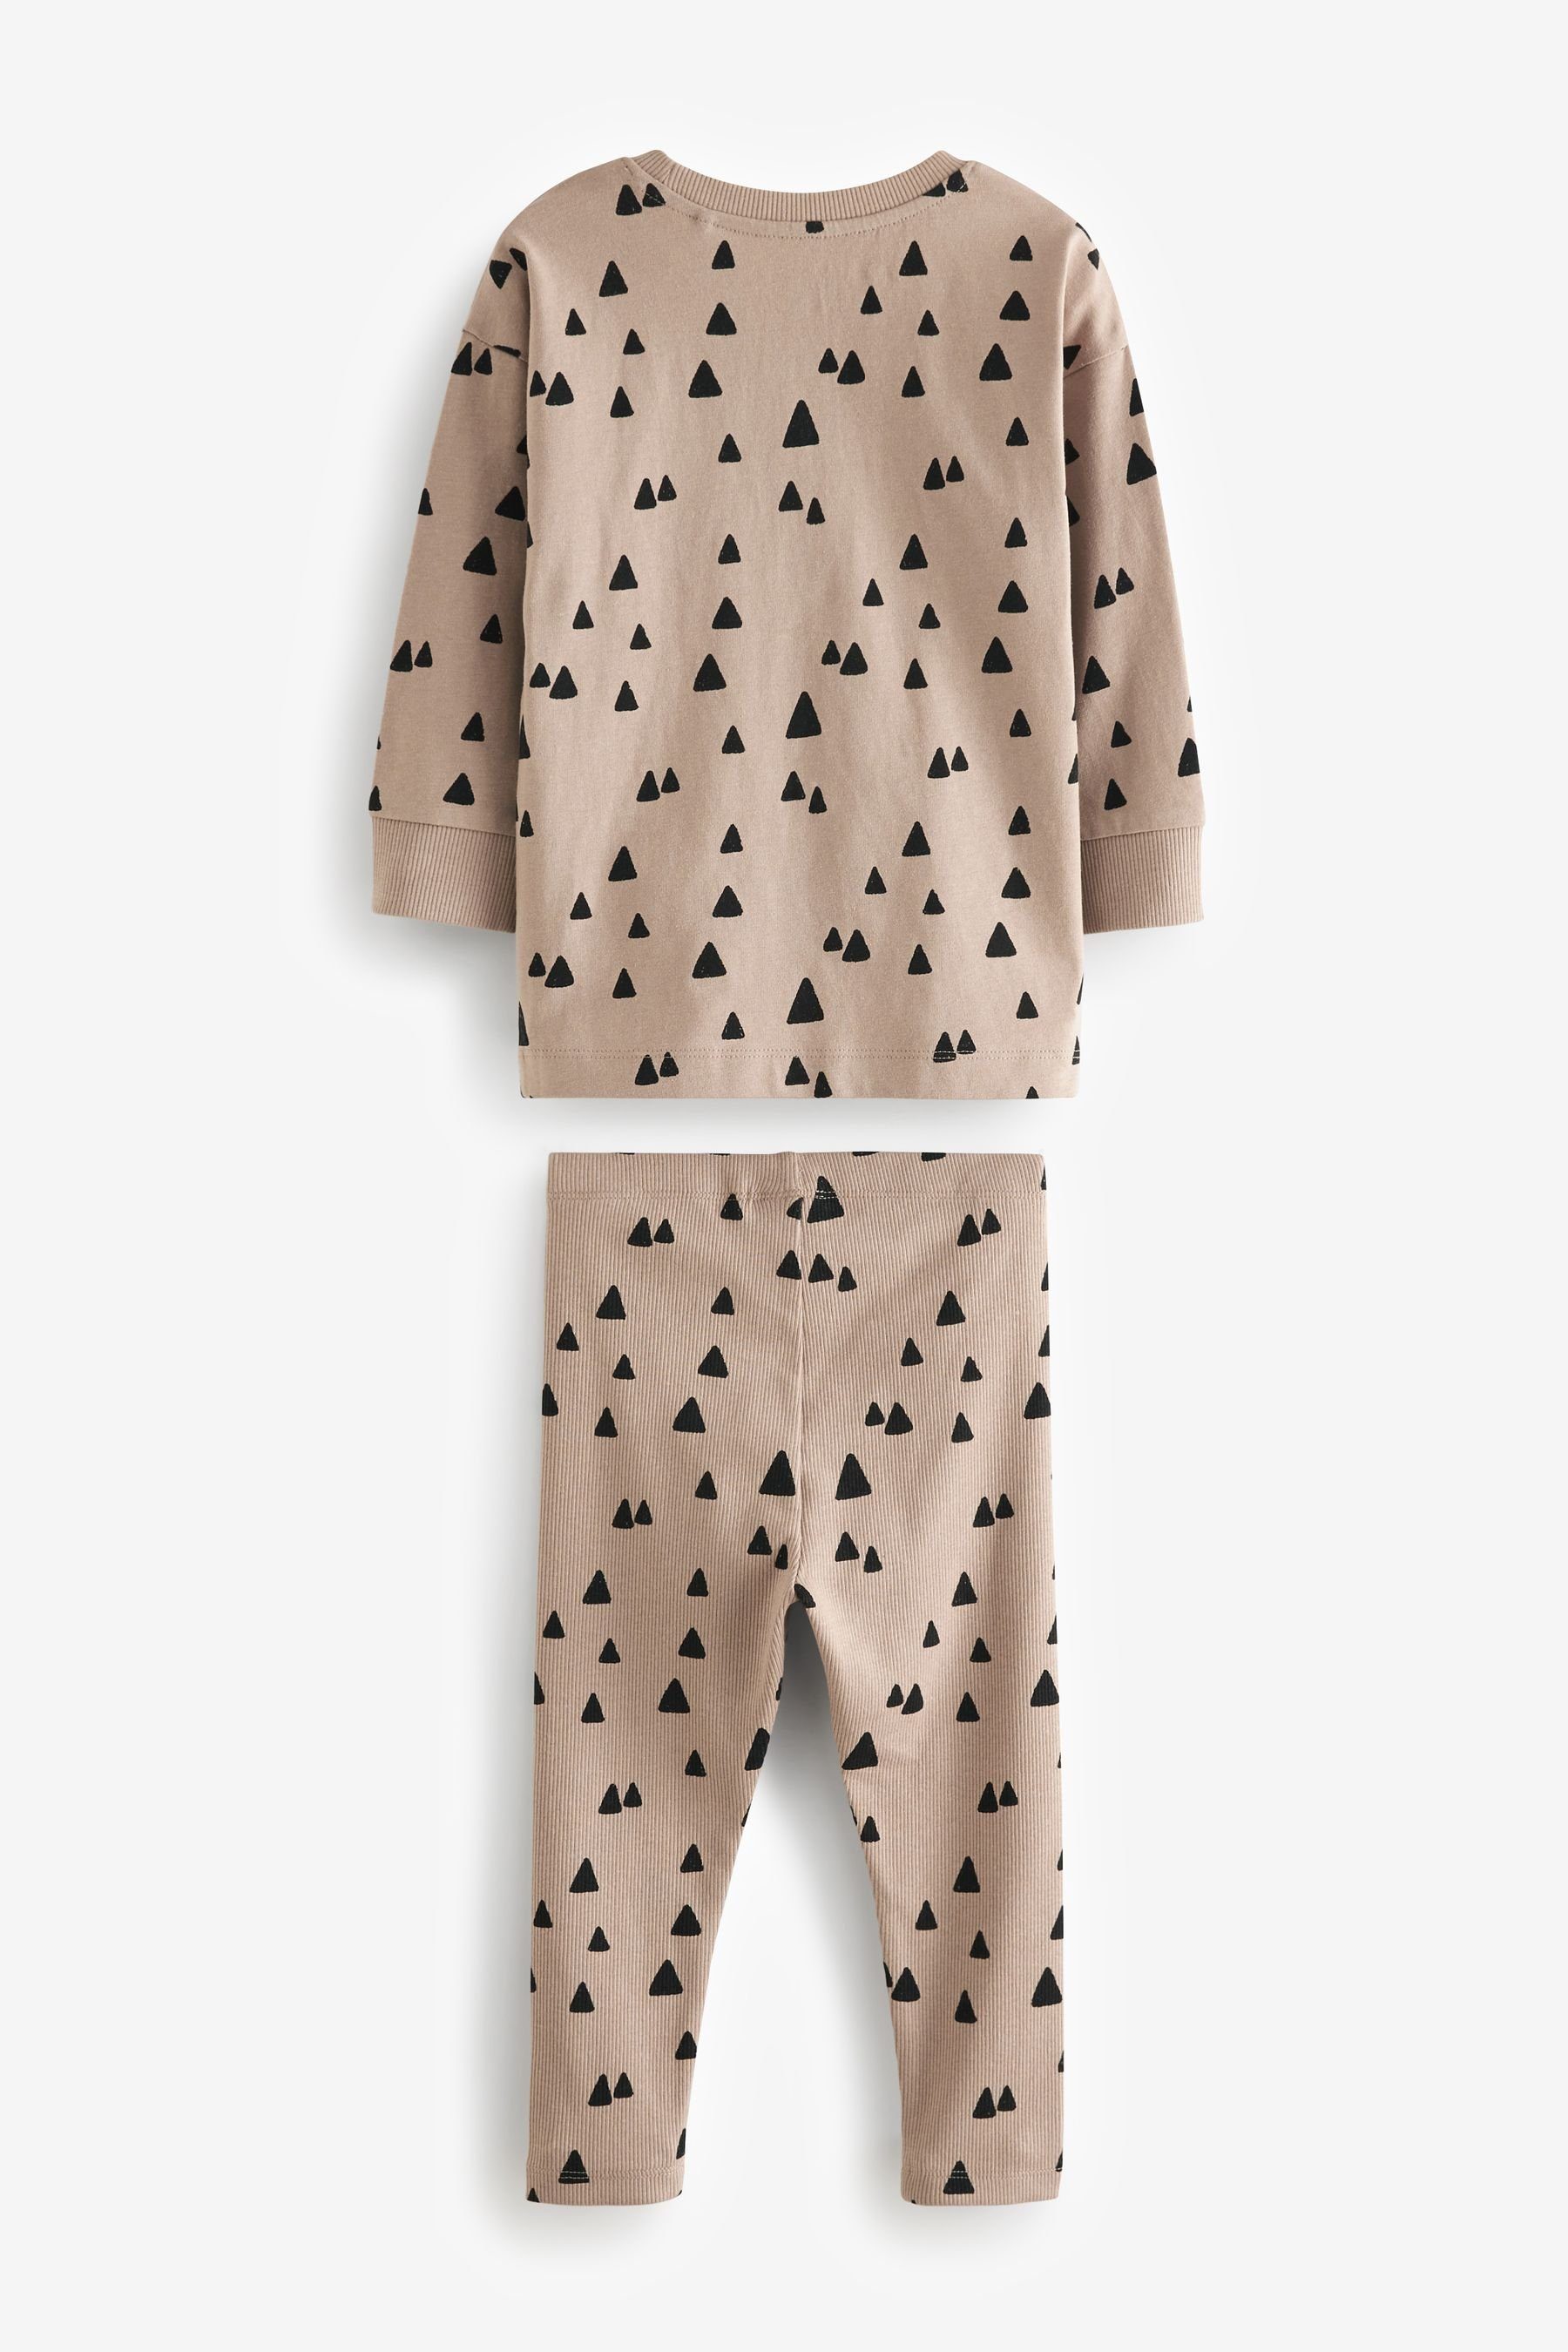 Next Pyjama Gerippter Snuggle Leggings-Pyjama, 3er-Pack Blue/Neutral (6 tlg) Mini Print